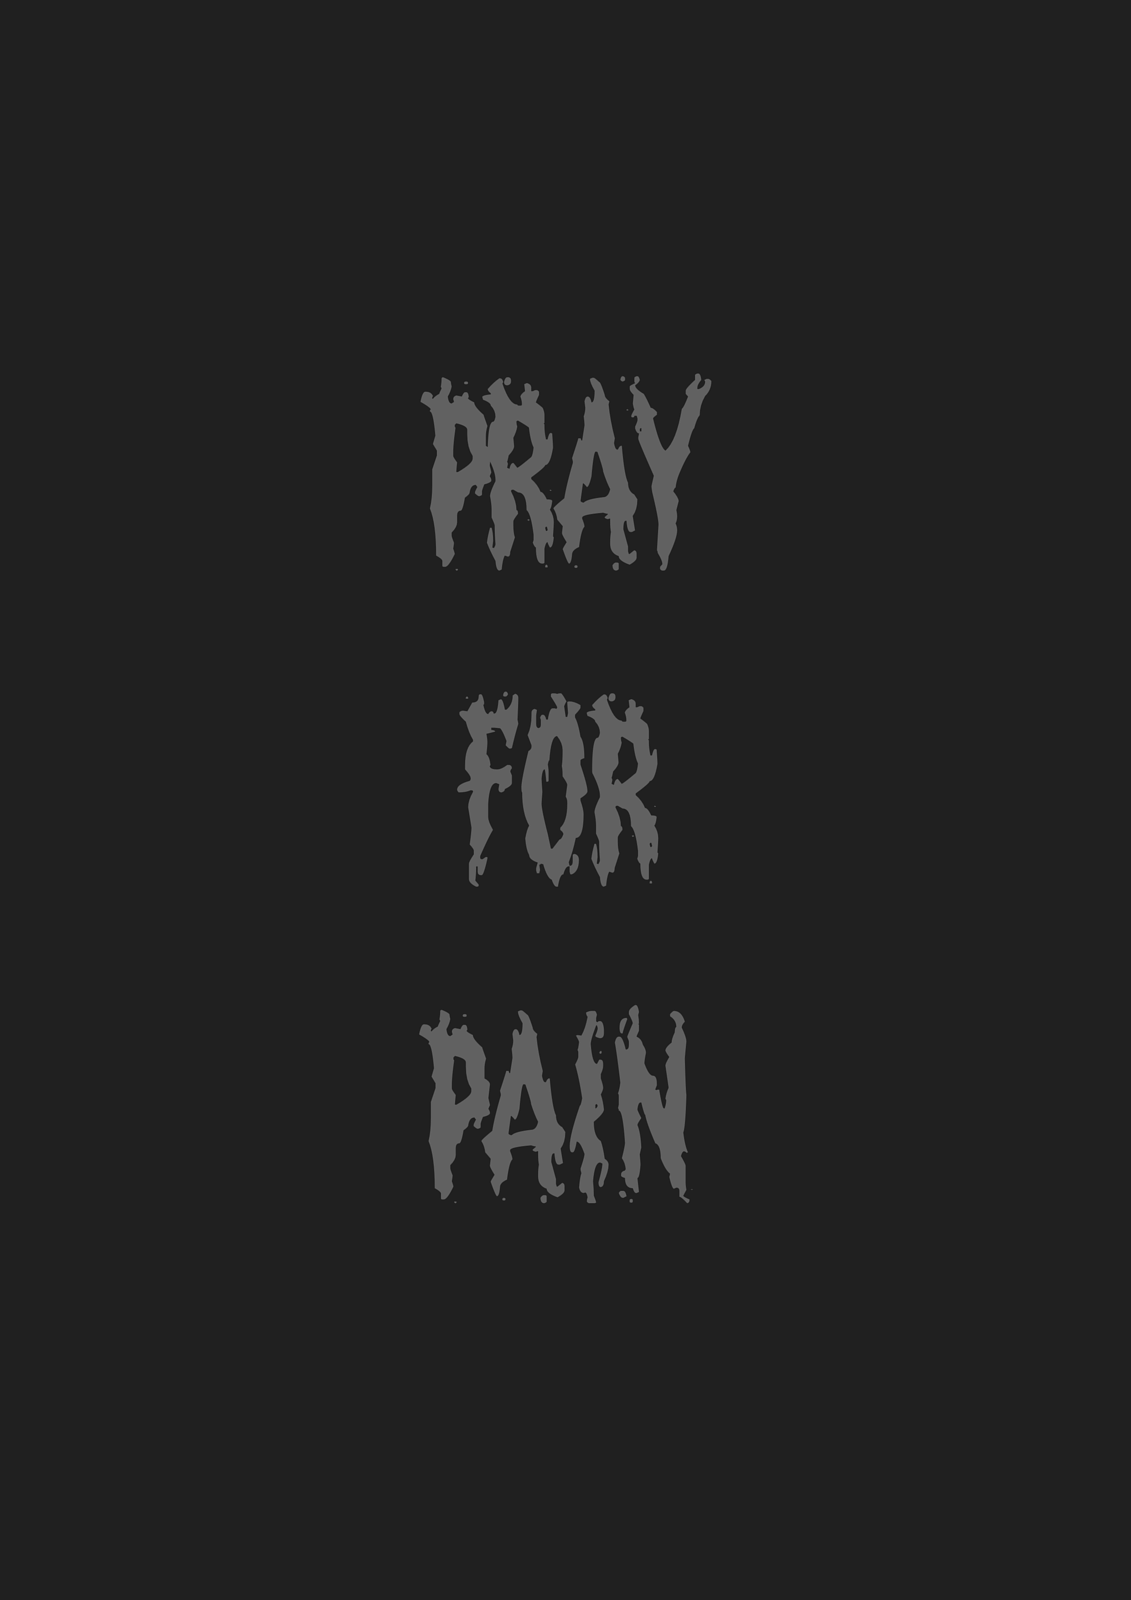 Pray for pain print